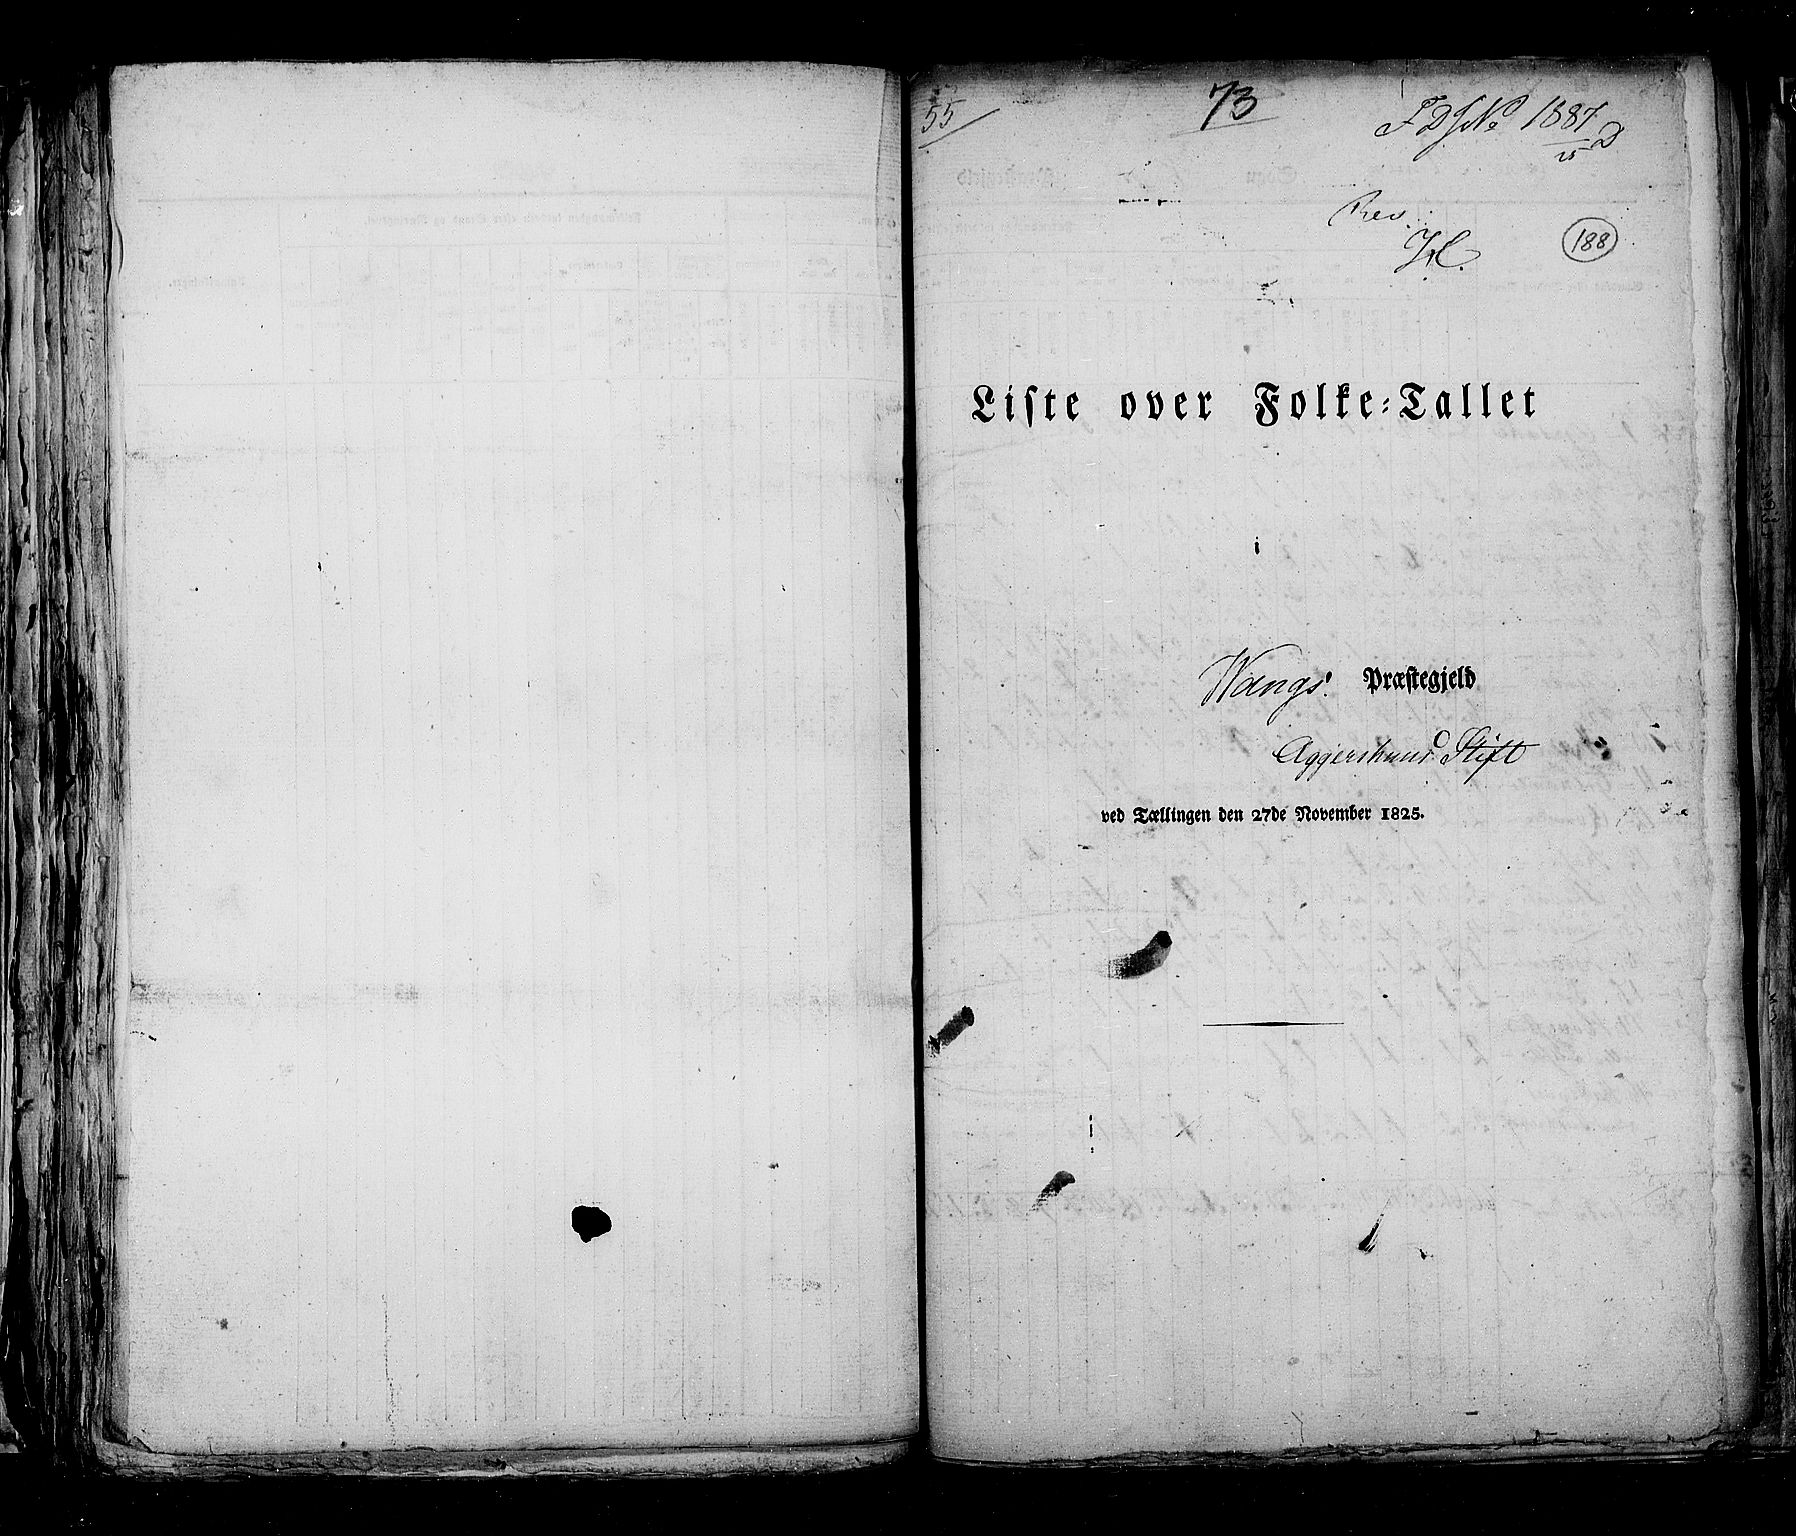 RA, Folketellingen 1825, bind 6: Kristians amt, 1825, s. 188